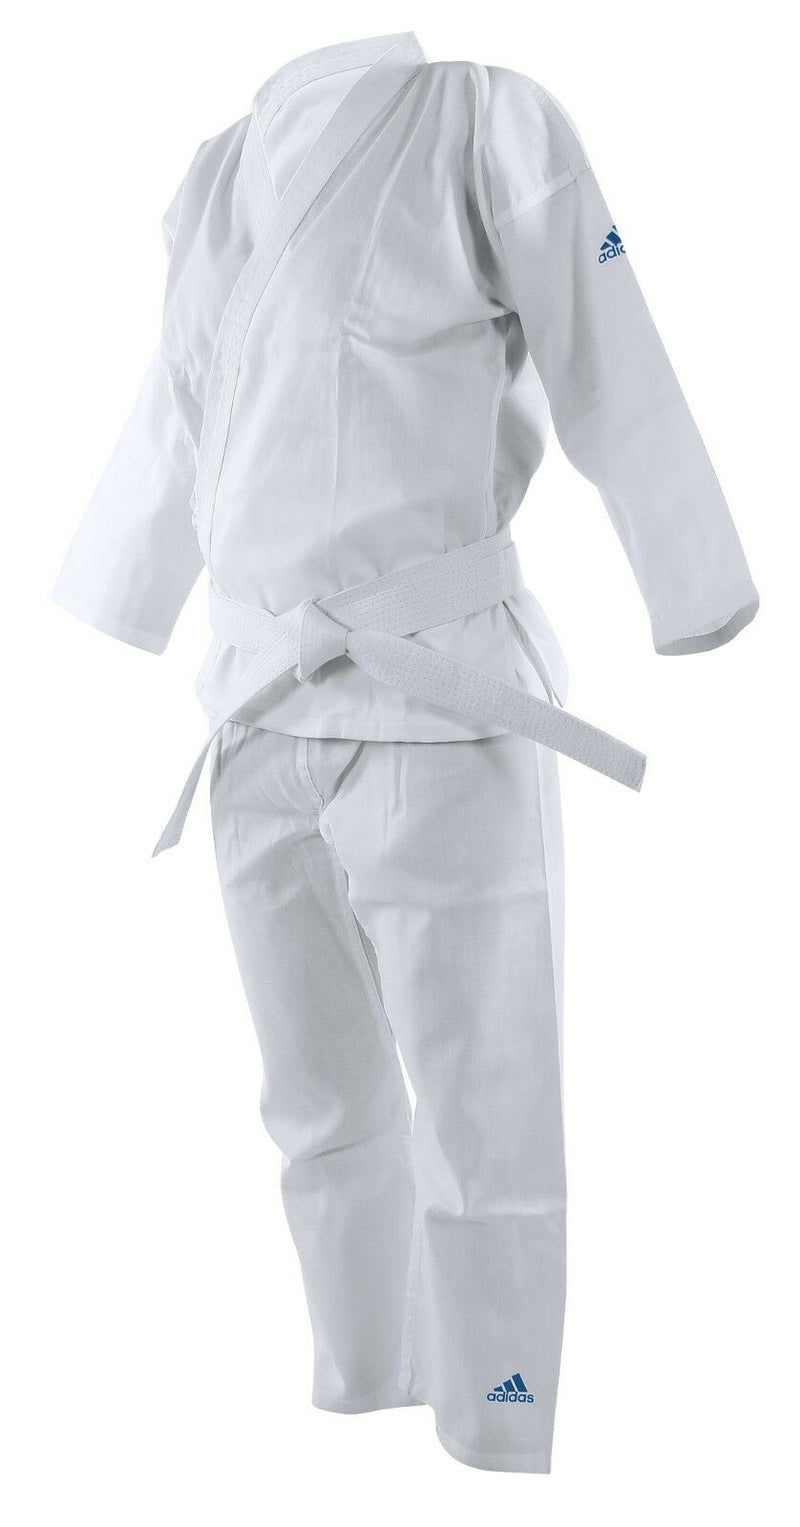 Adidas AdiSTART Karate Gi Suit 7oz White Uniform Student Kids Adults Unisex - Hamtons Direct